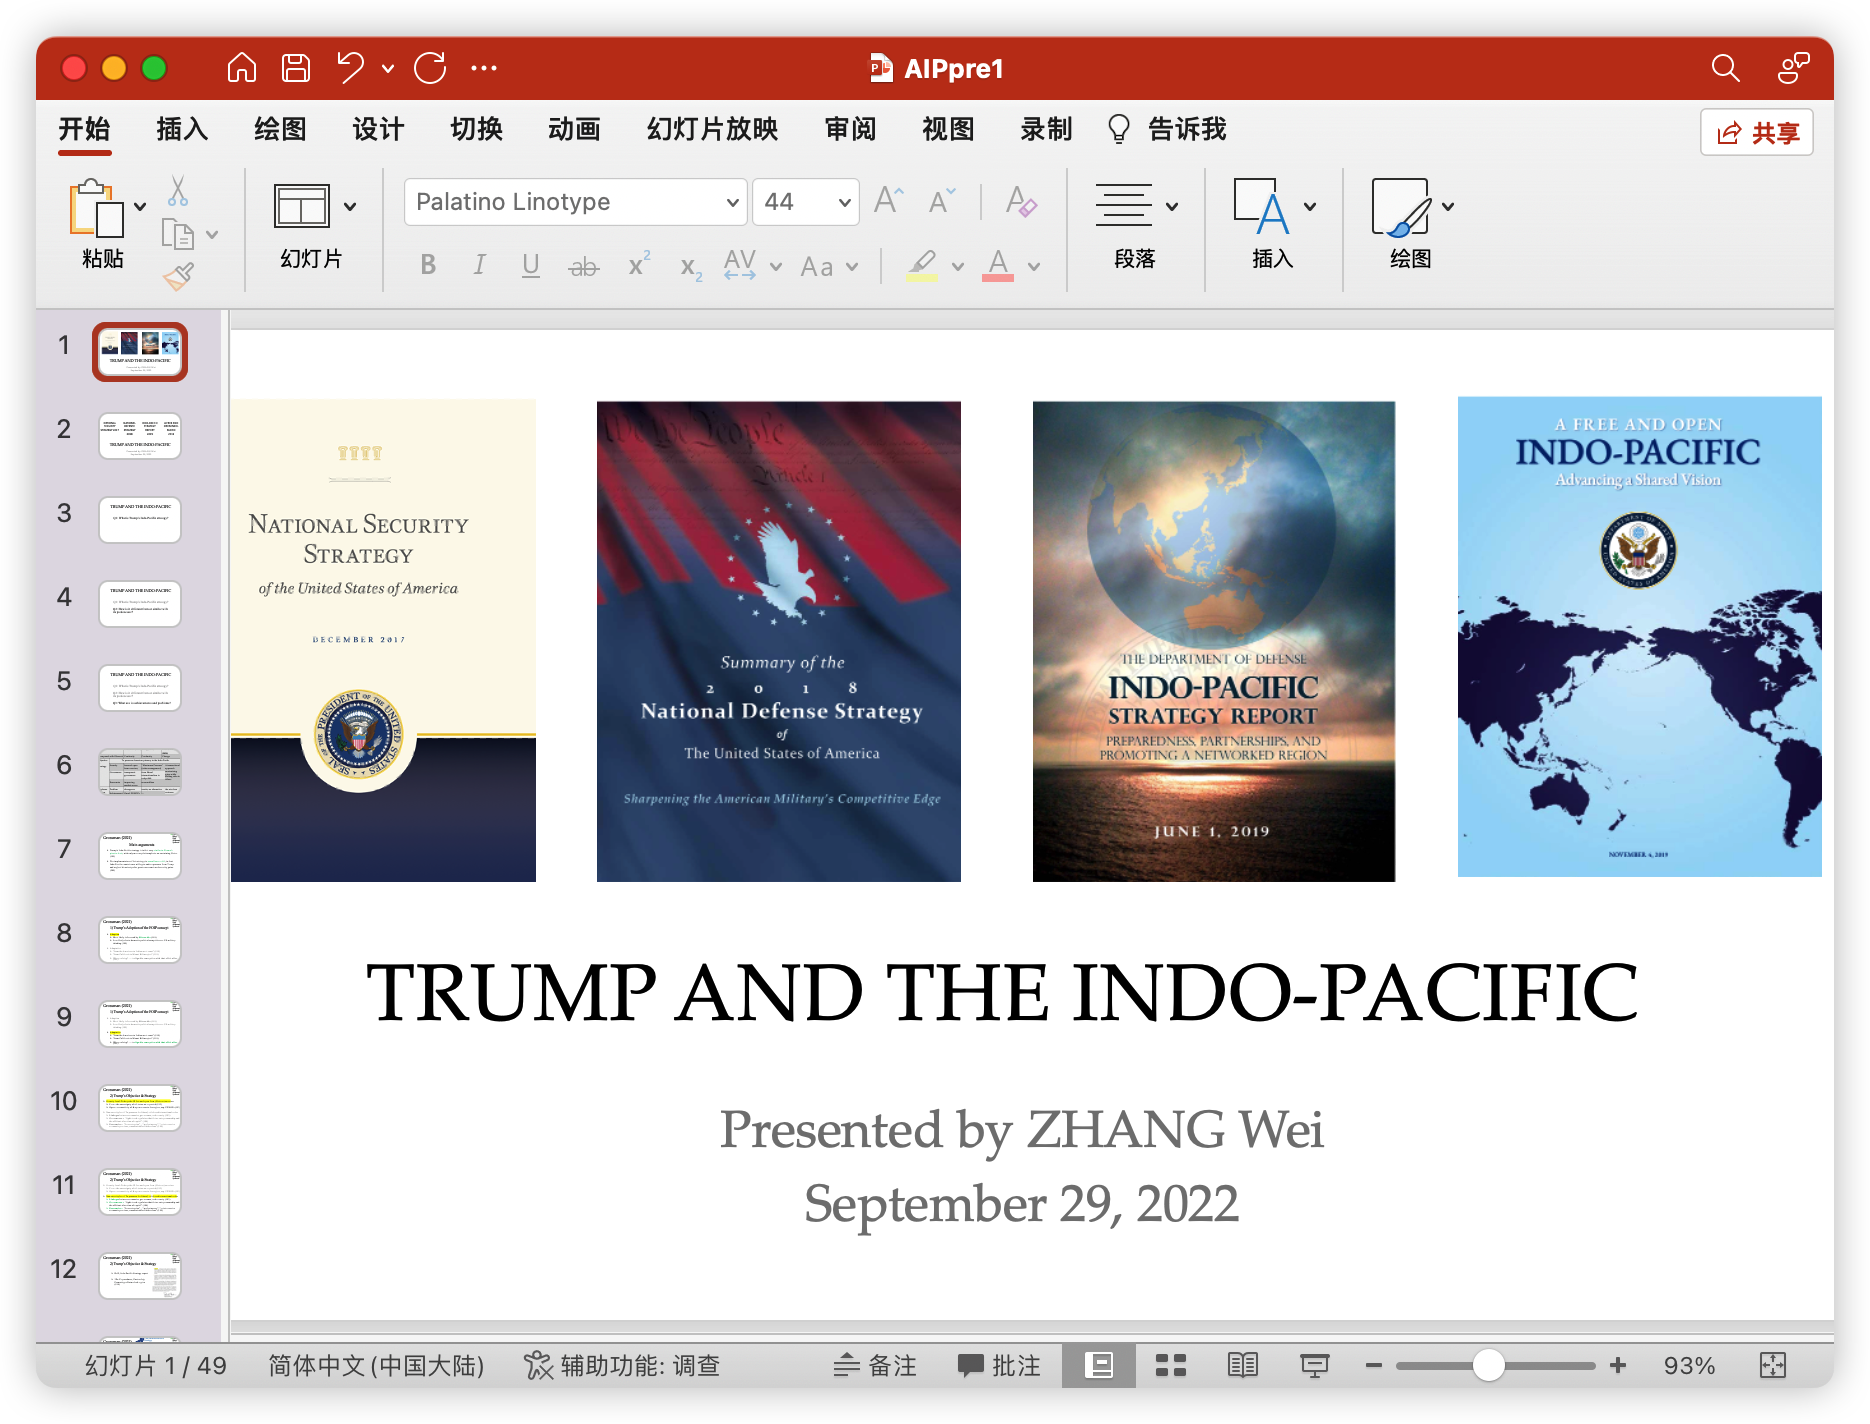 Trump and Indo-Pacific